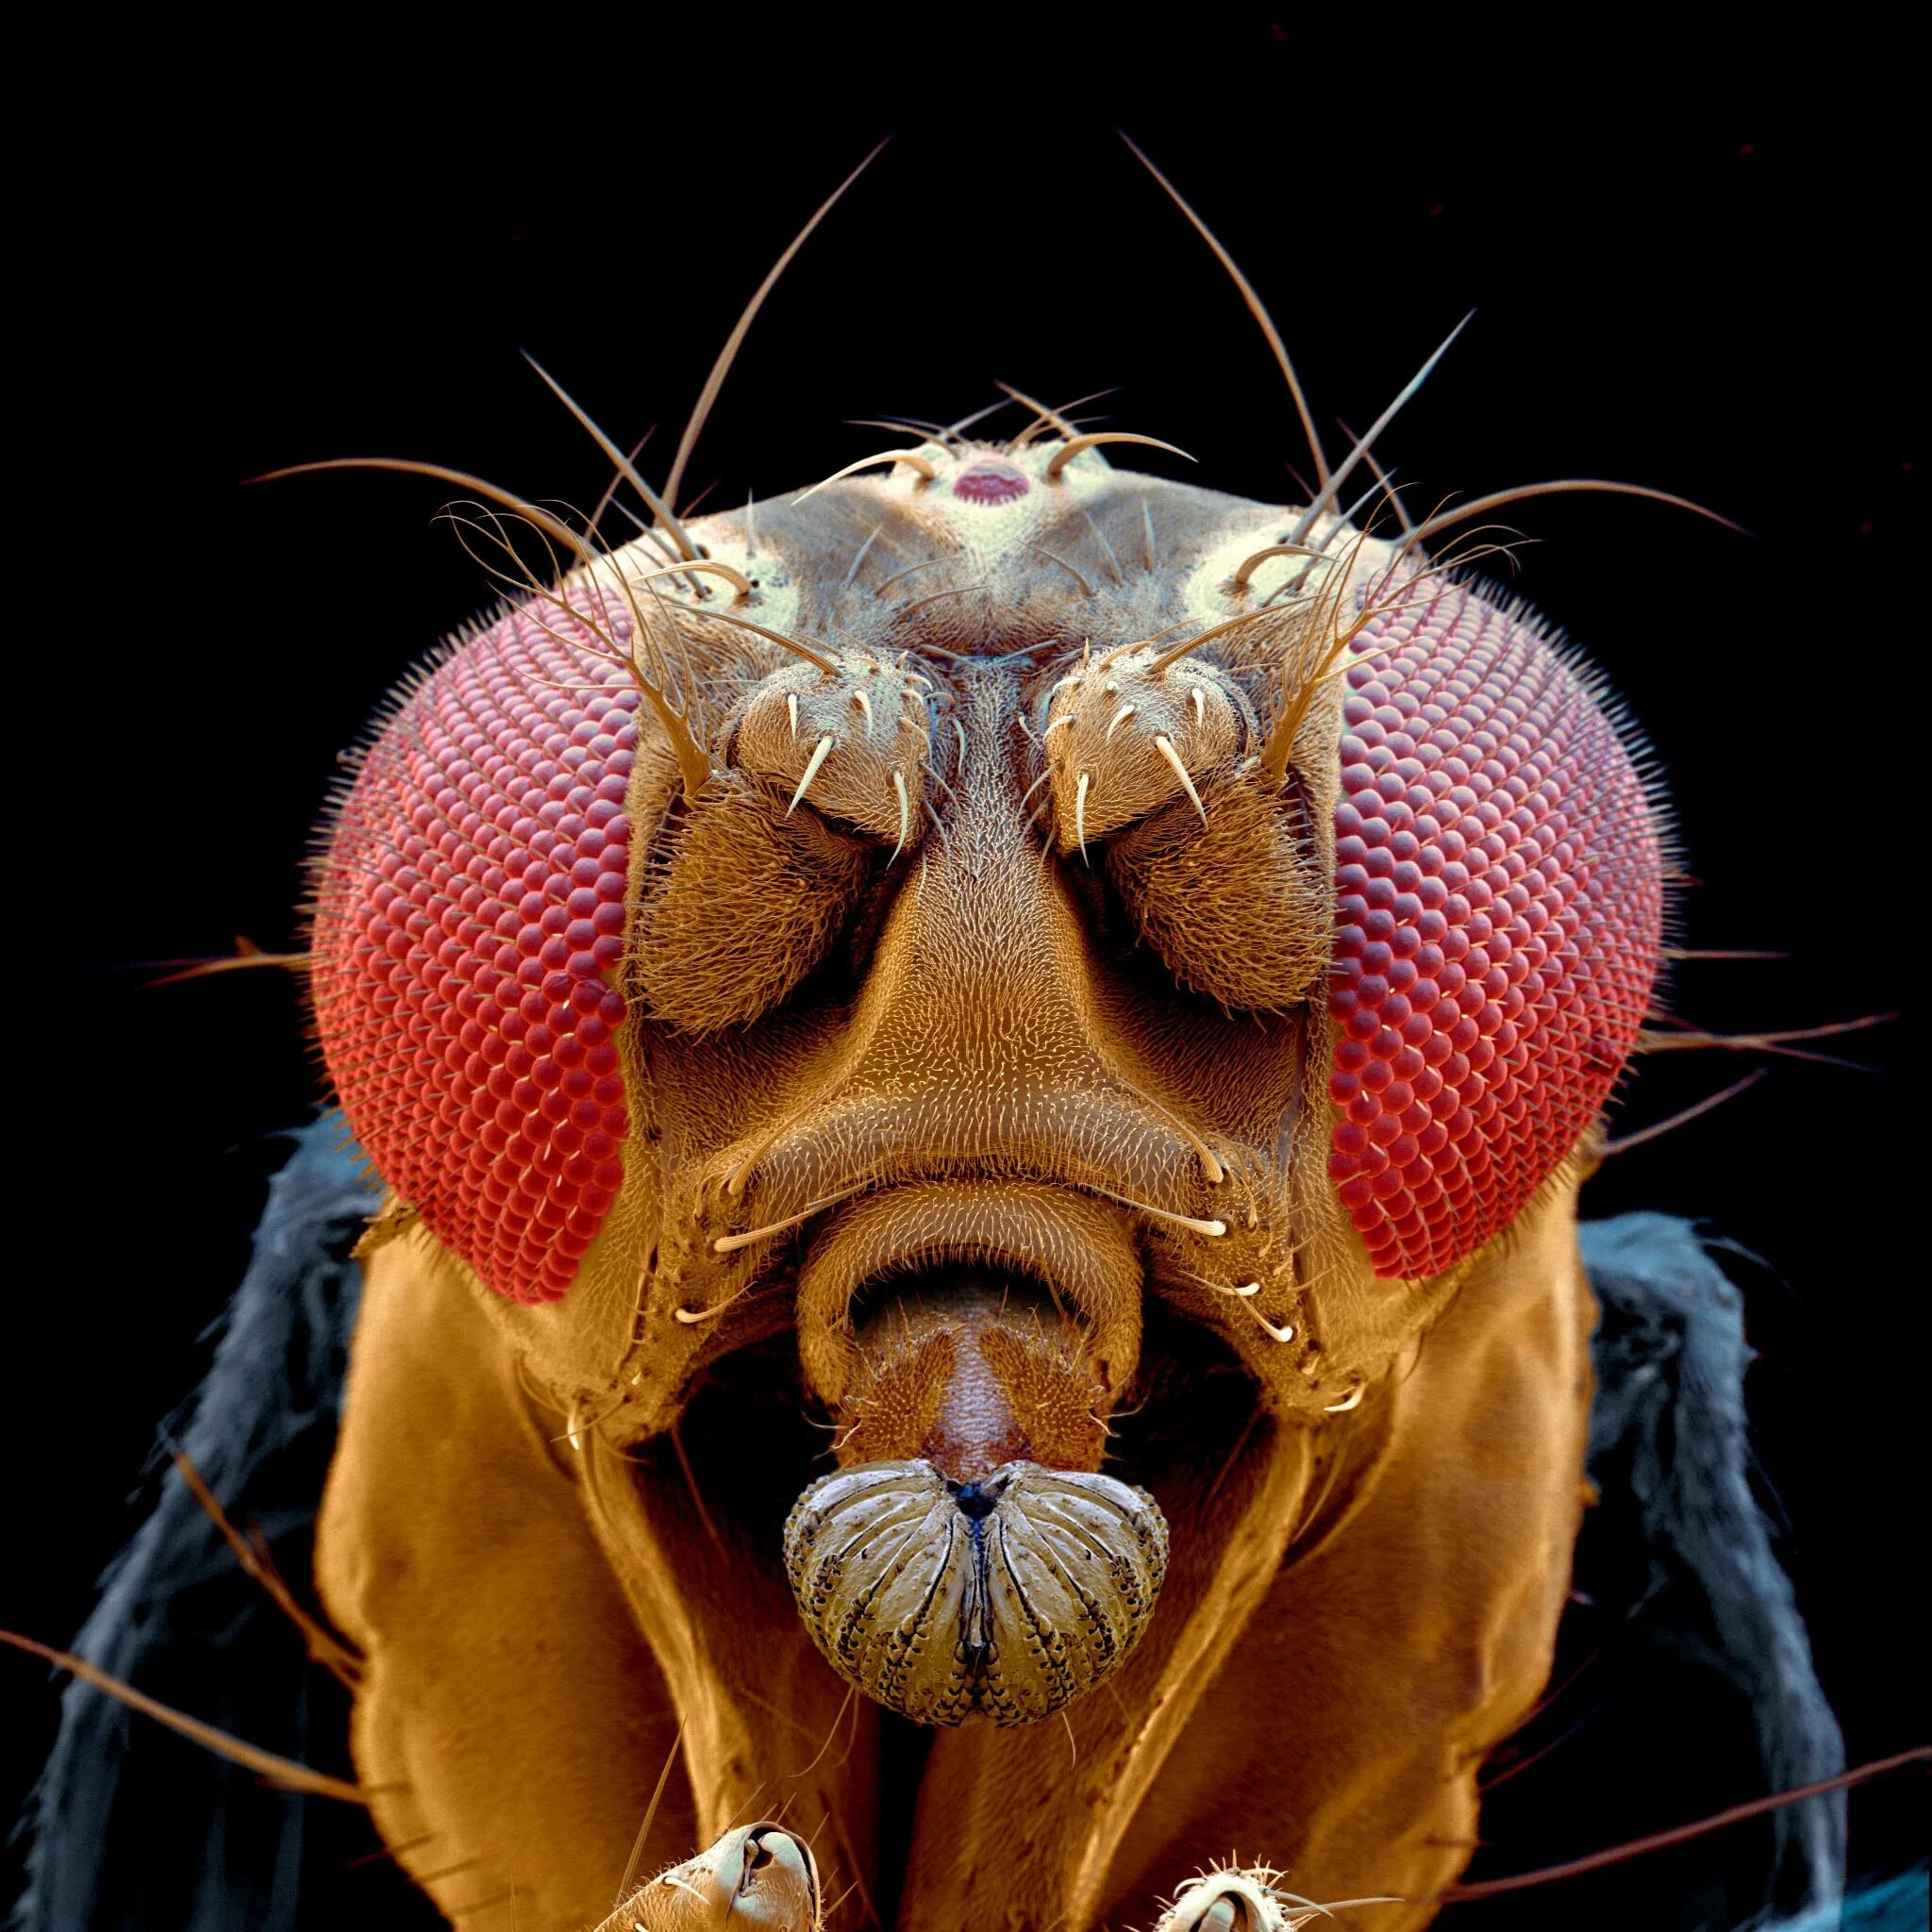 Мошка под микроскопом фото. Муха дрозофила. Астраханская мошка под микроскопом. Муха дрозофила под микроскопом. Мех под микроскопом.